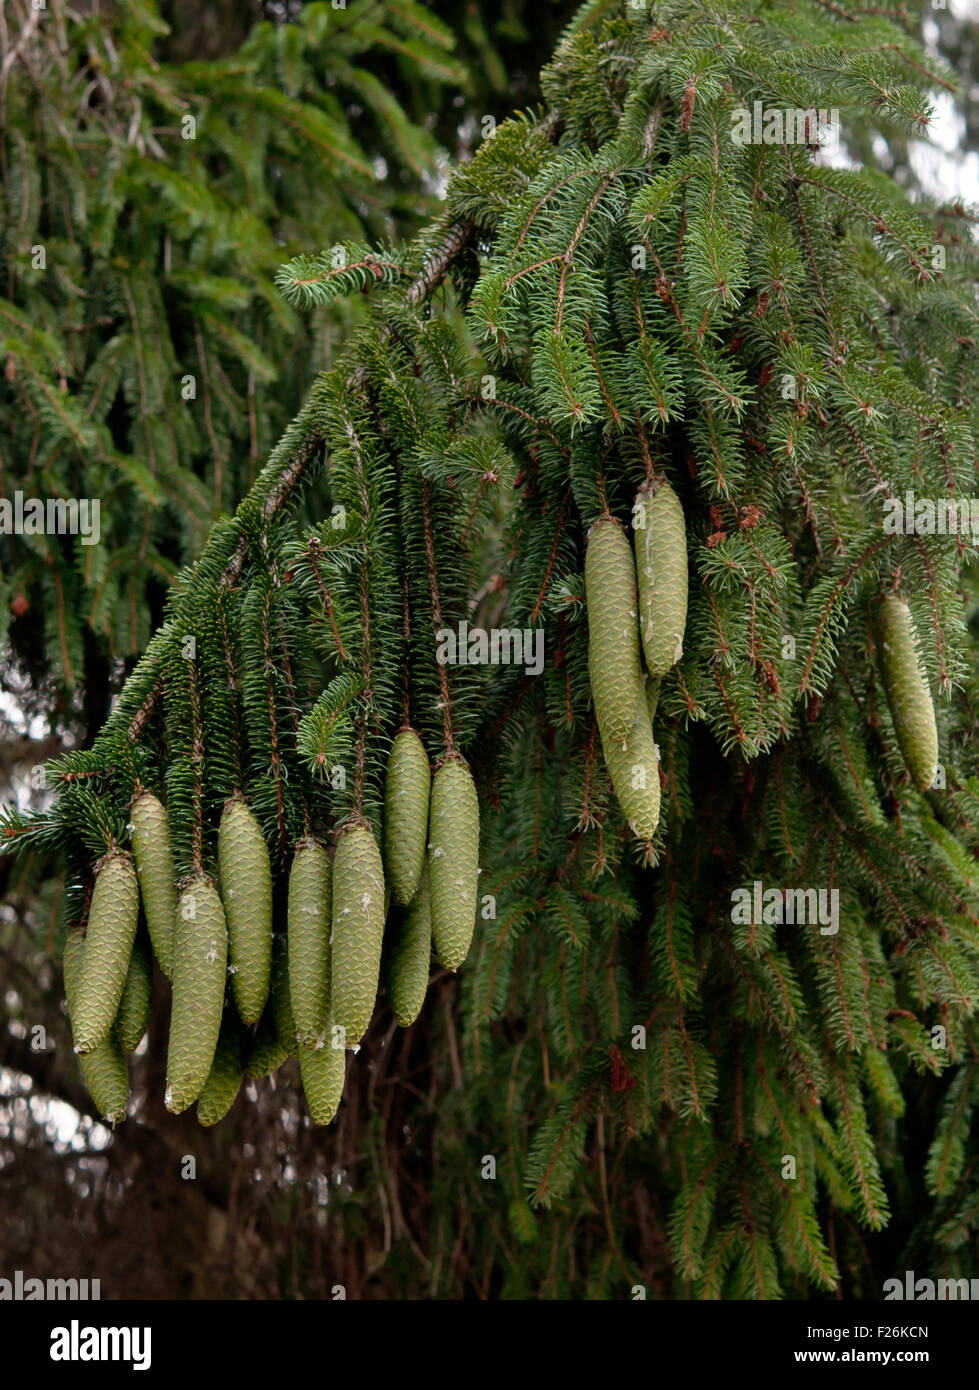 pine cone close up Stock Photo